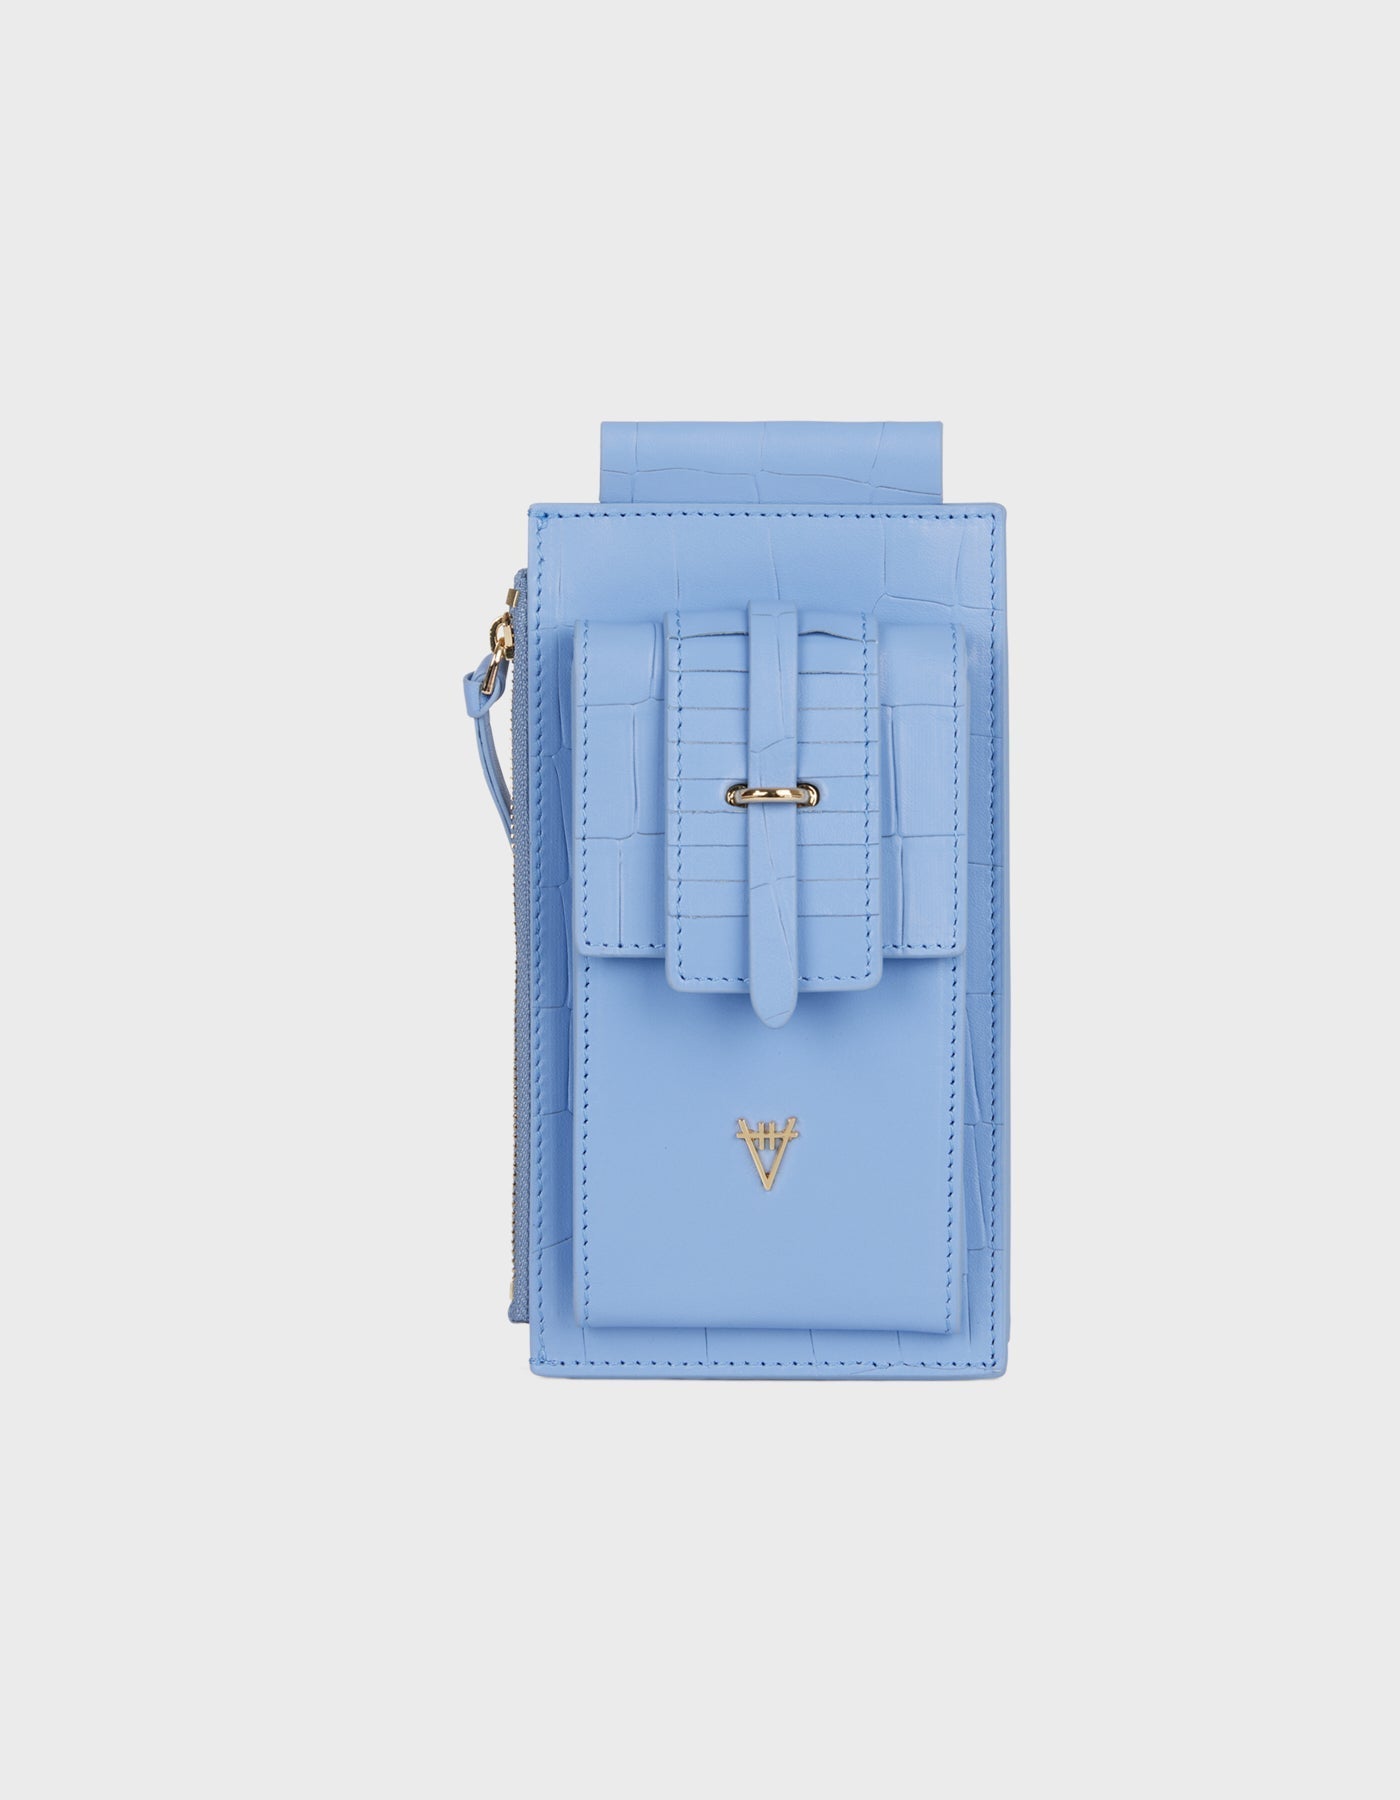 HiVa Atelier | Crossbody Phone Bag Croco Effect Tranquil Blue | Beautiful and Versatile